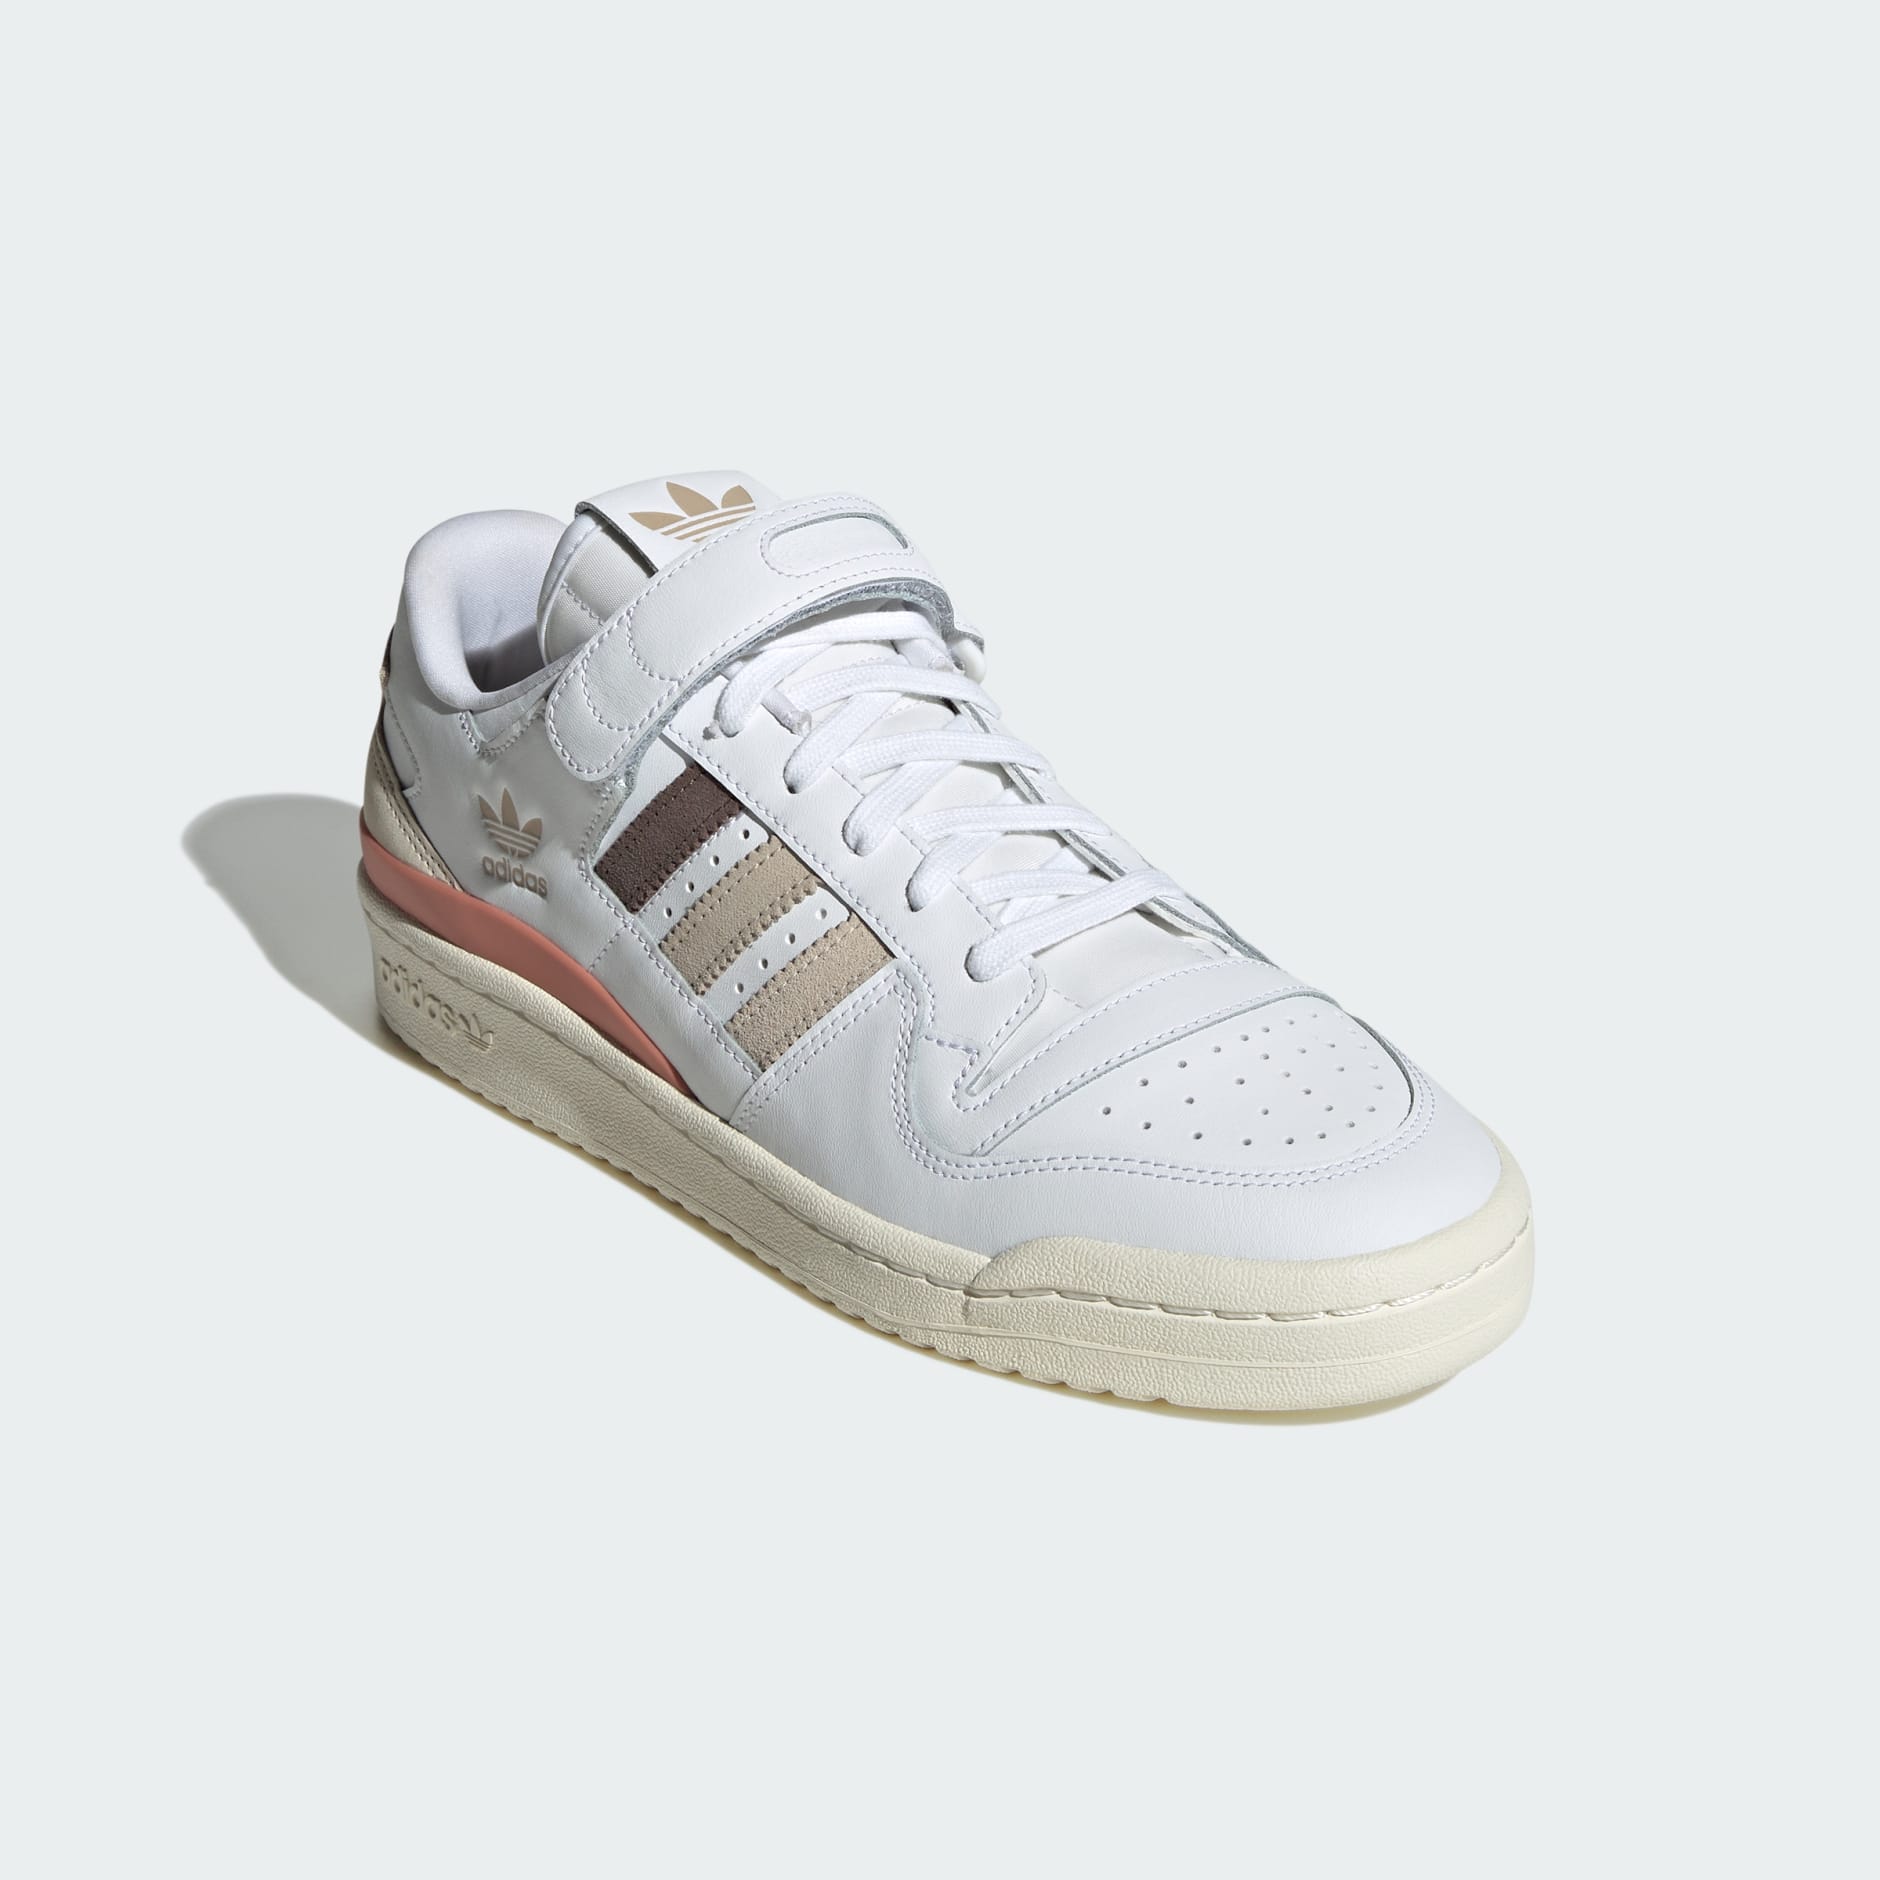 adidas Forum 84 Low Shoes - White | adidas LK